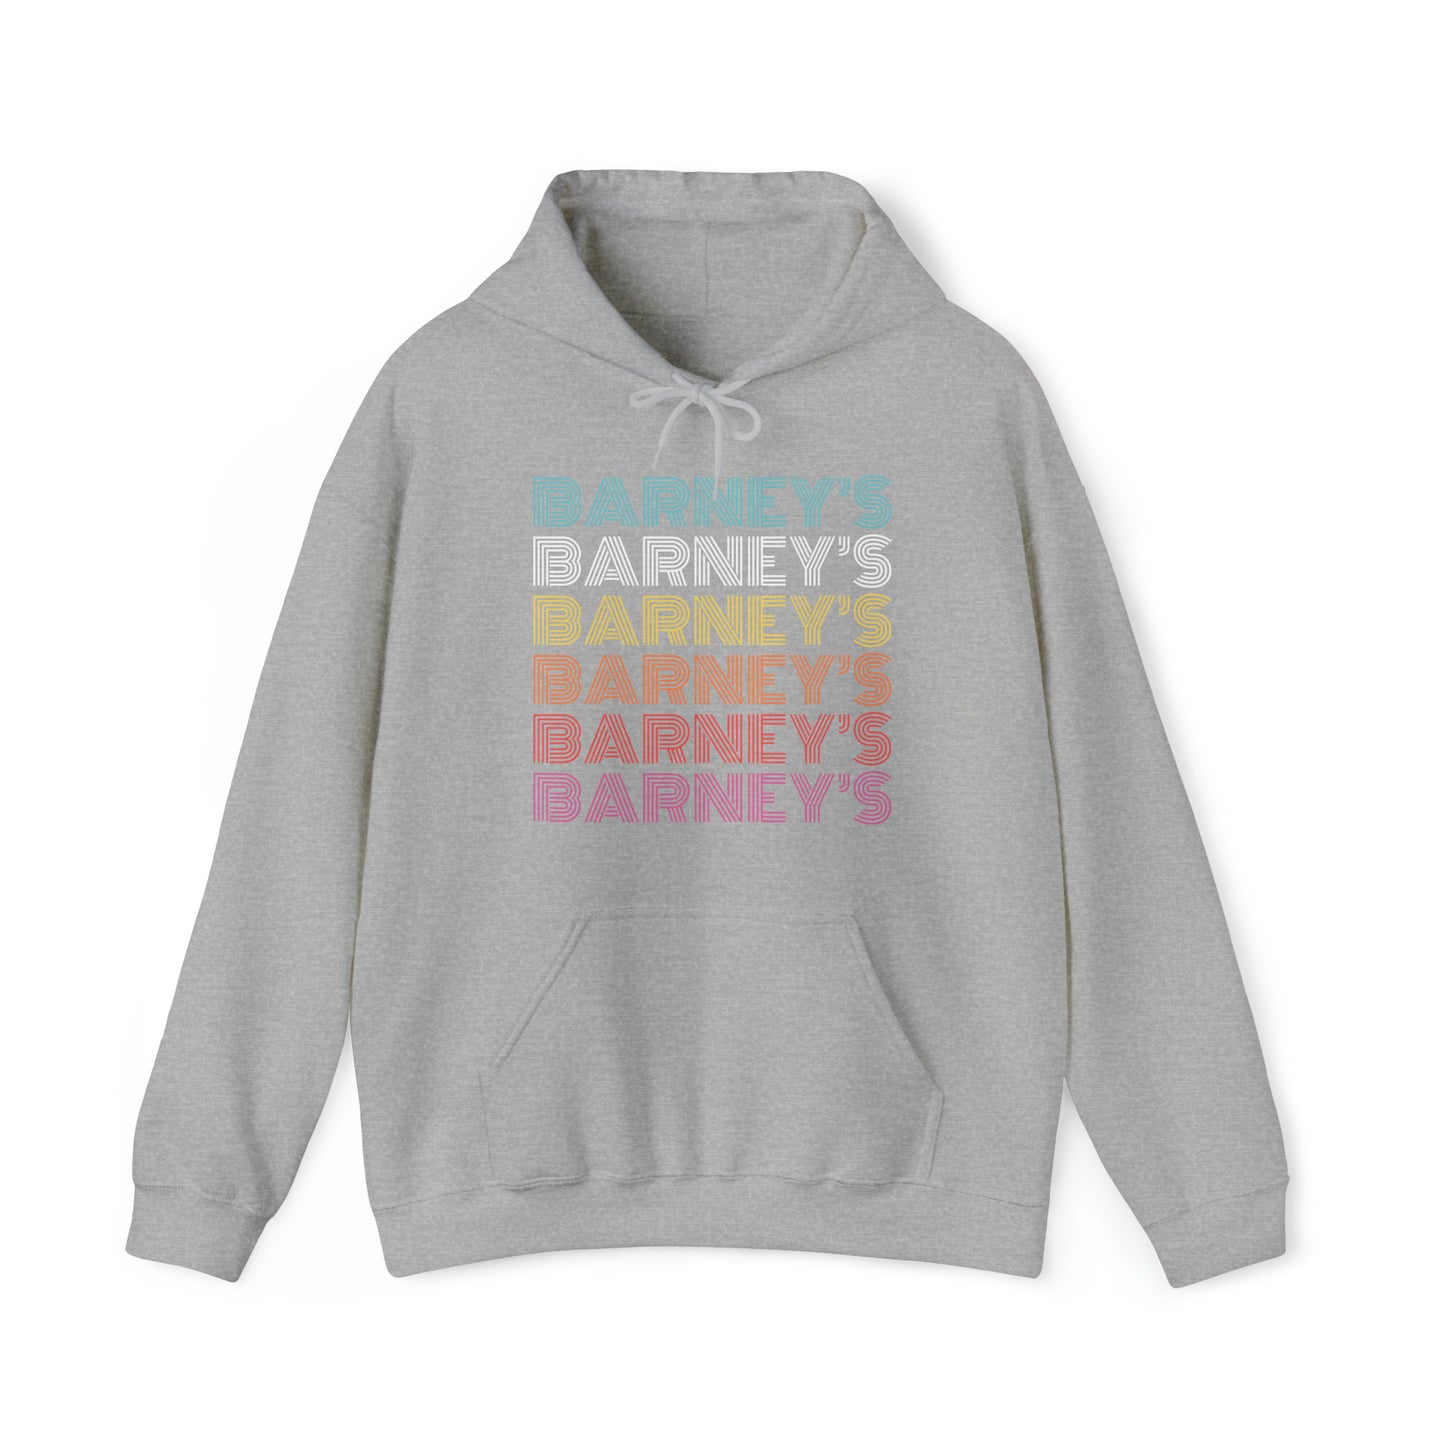 Barney's x6 Retro Hollywood | BARNEY'S BEANERY - Women's Retro Graphic Hoodie